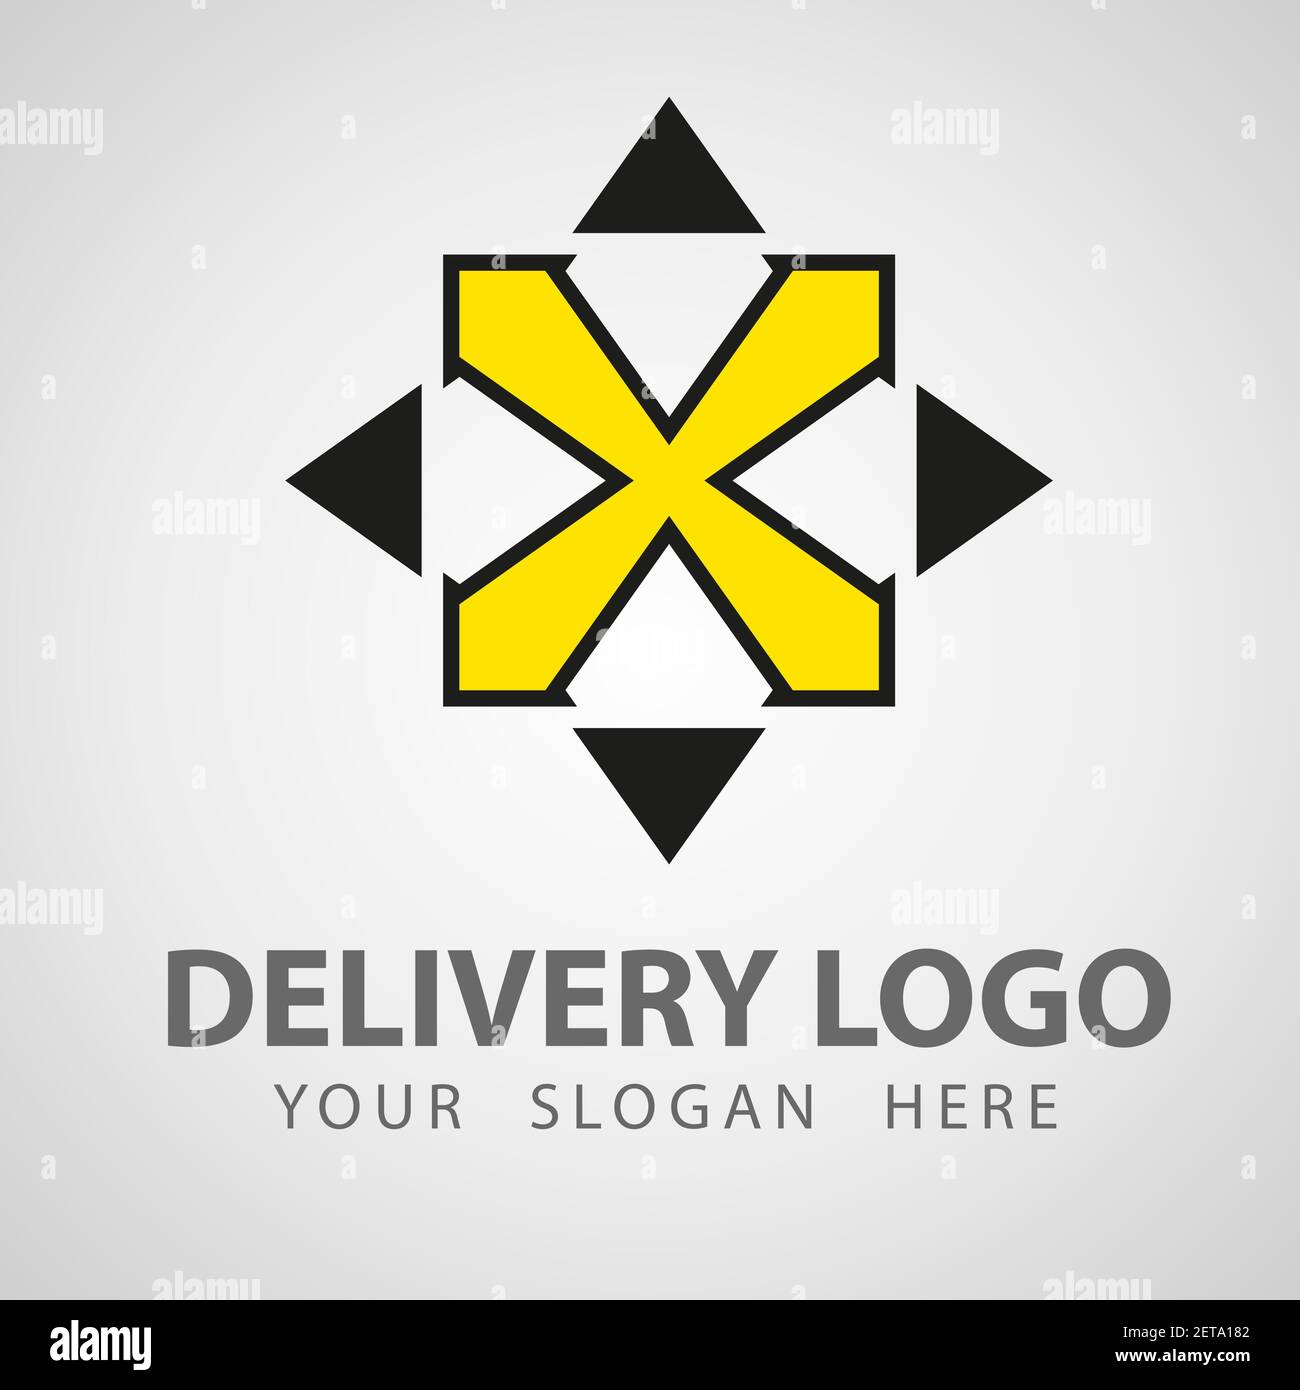 Logistic company logo. Arrow icon. Delivery icon. Arrow logo. Business logo. Arrow vector. Delivery service logo. Web,Network, Digital, Technology Stock Vector